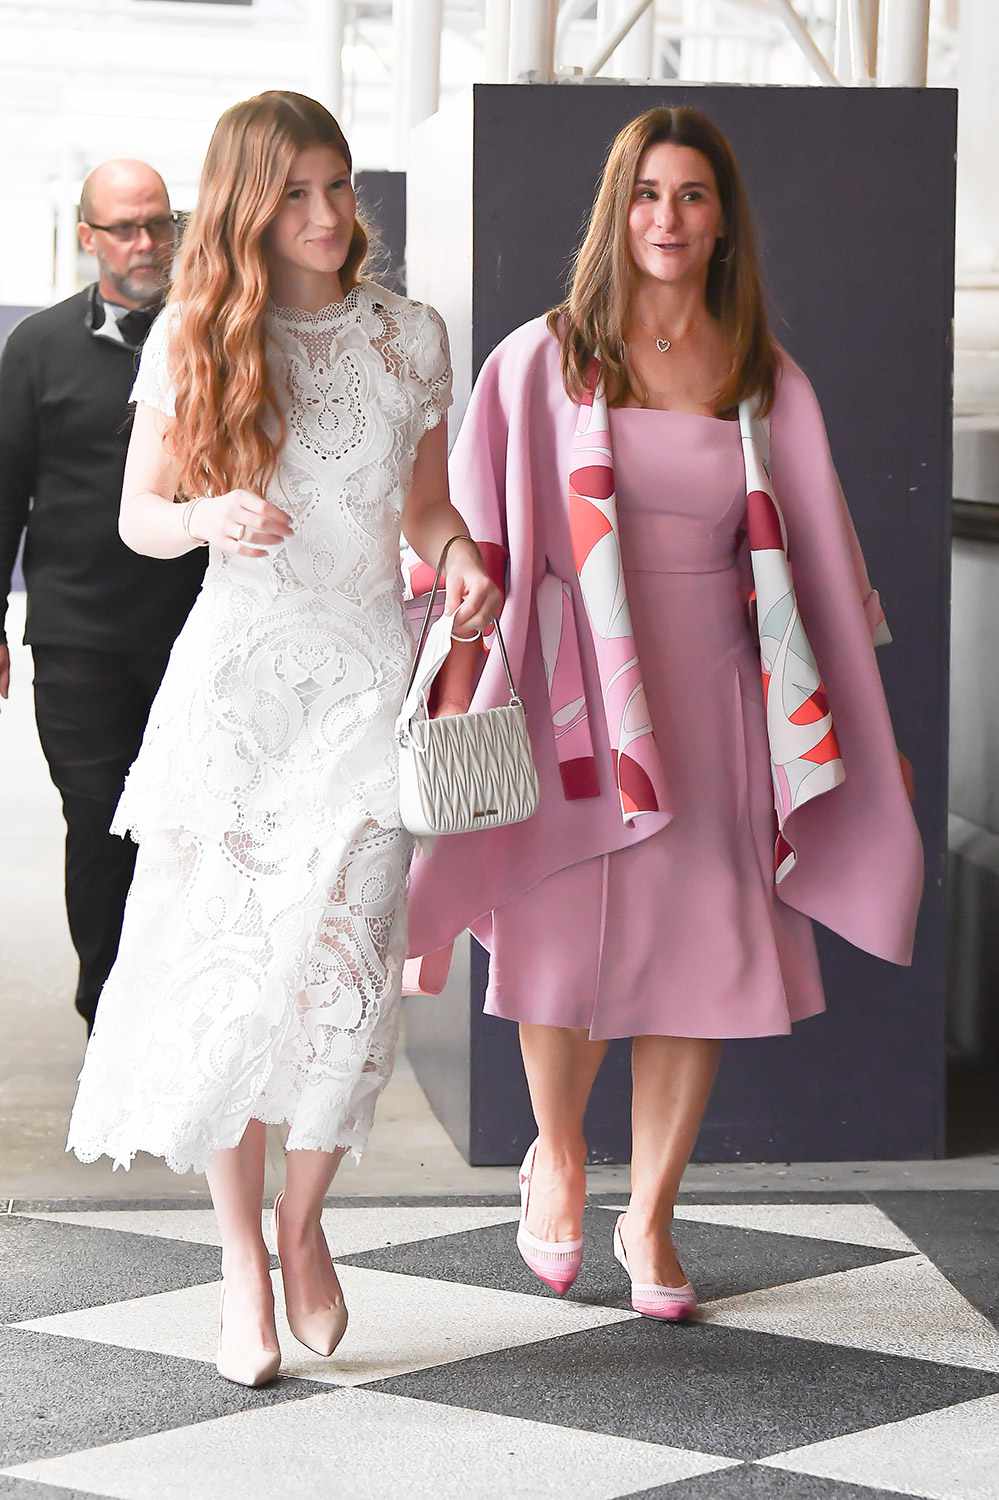 Melinda Gates Smiles While Spending Time with Daughter Jennifer in N.Y.C. Ahead of Wedding Weekend